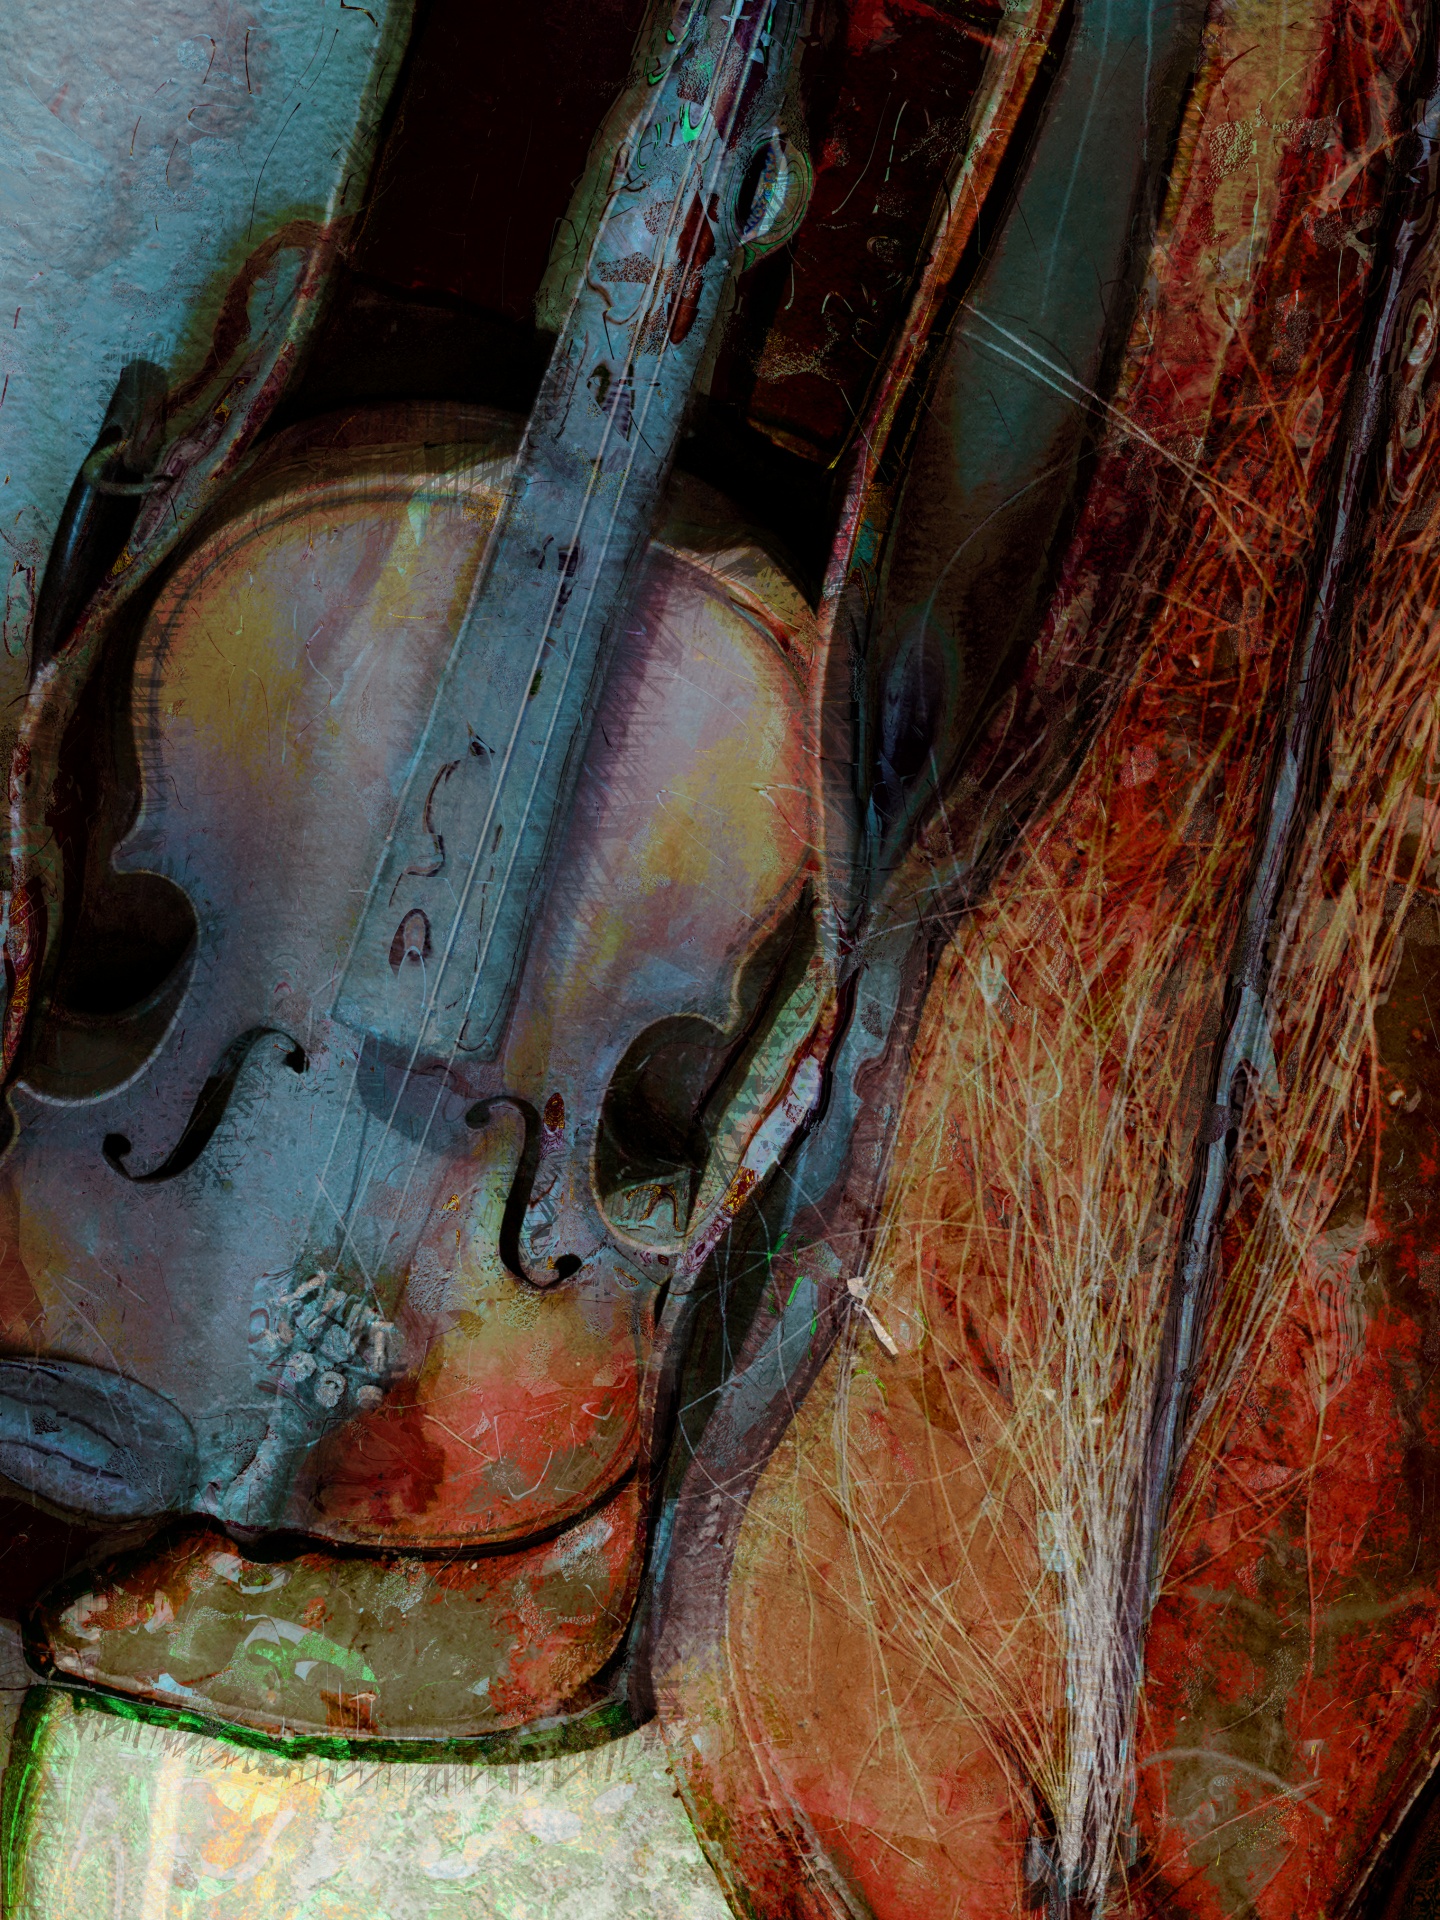 Old Violin